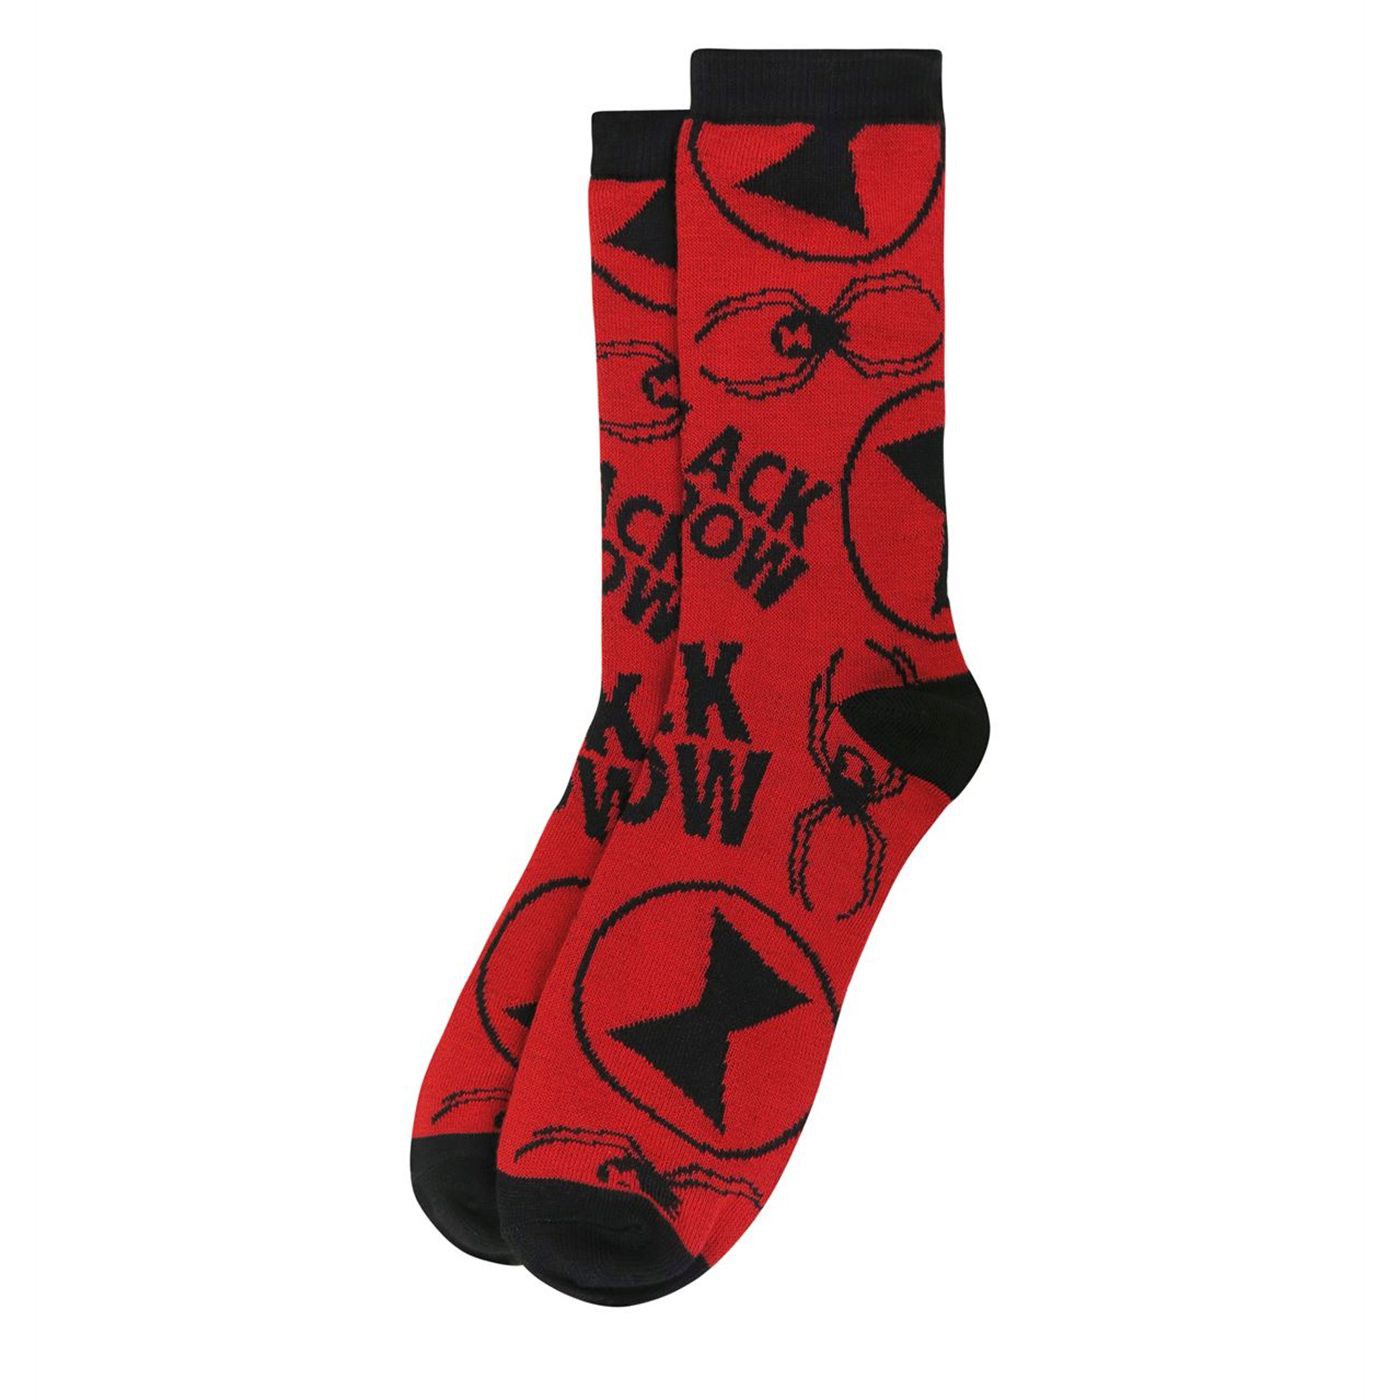 Black Widow Symbols and Logos Crew Socks